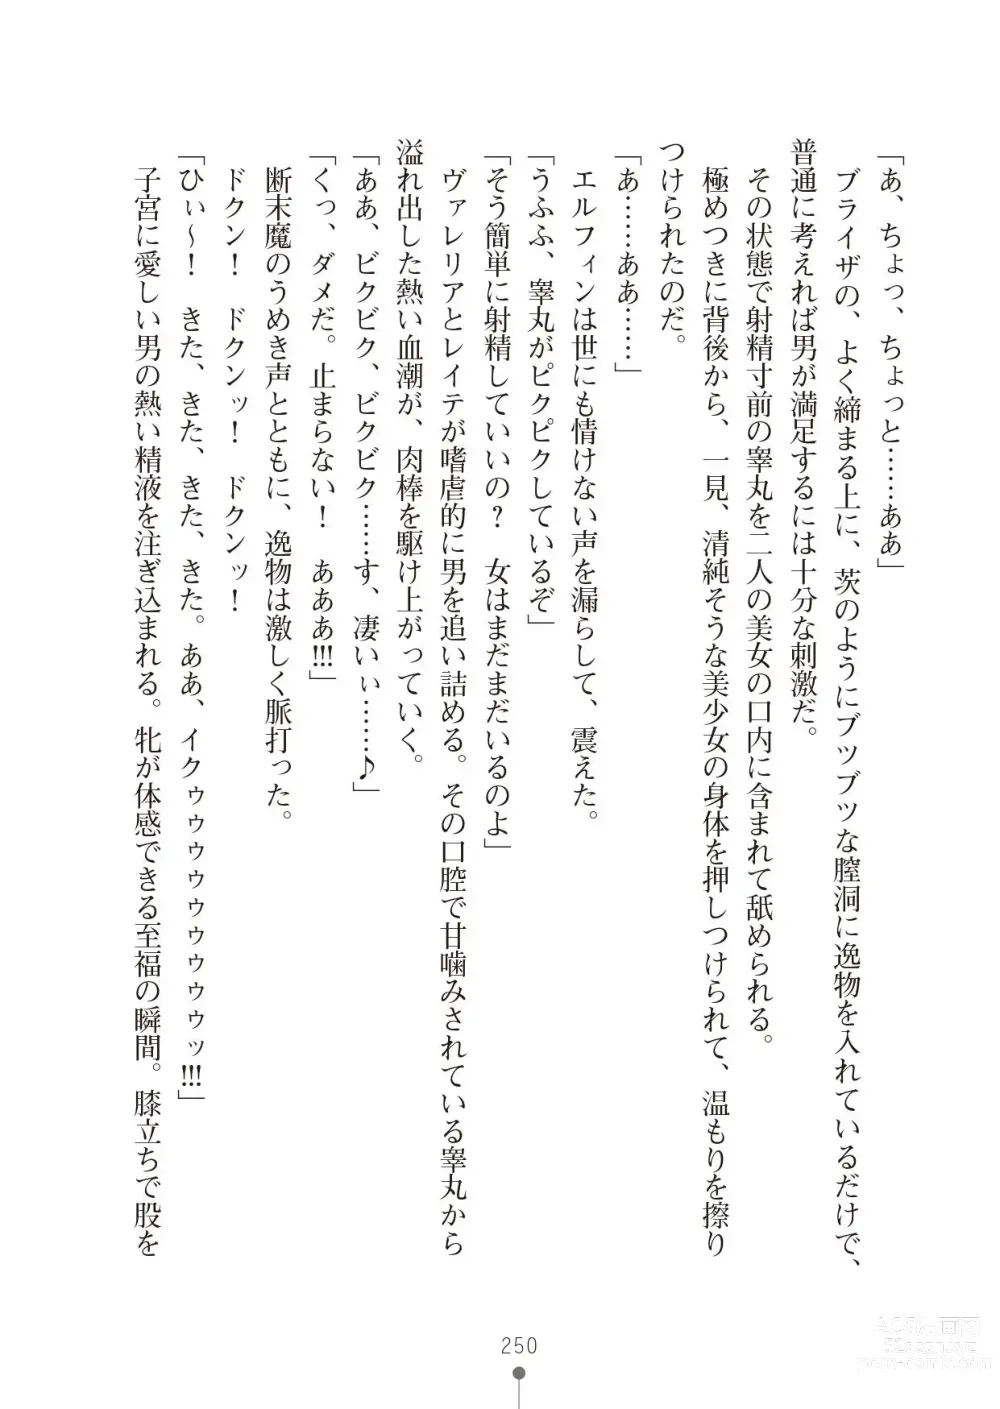 Page 250 of manga Harem Resistance 2